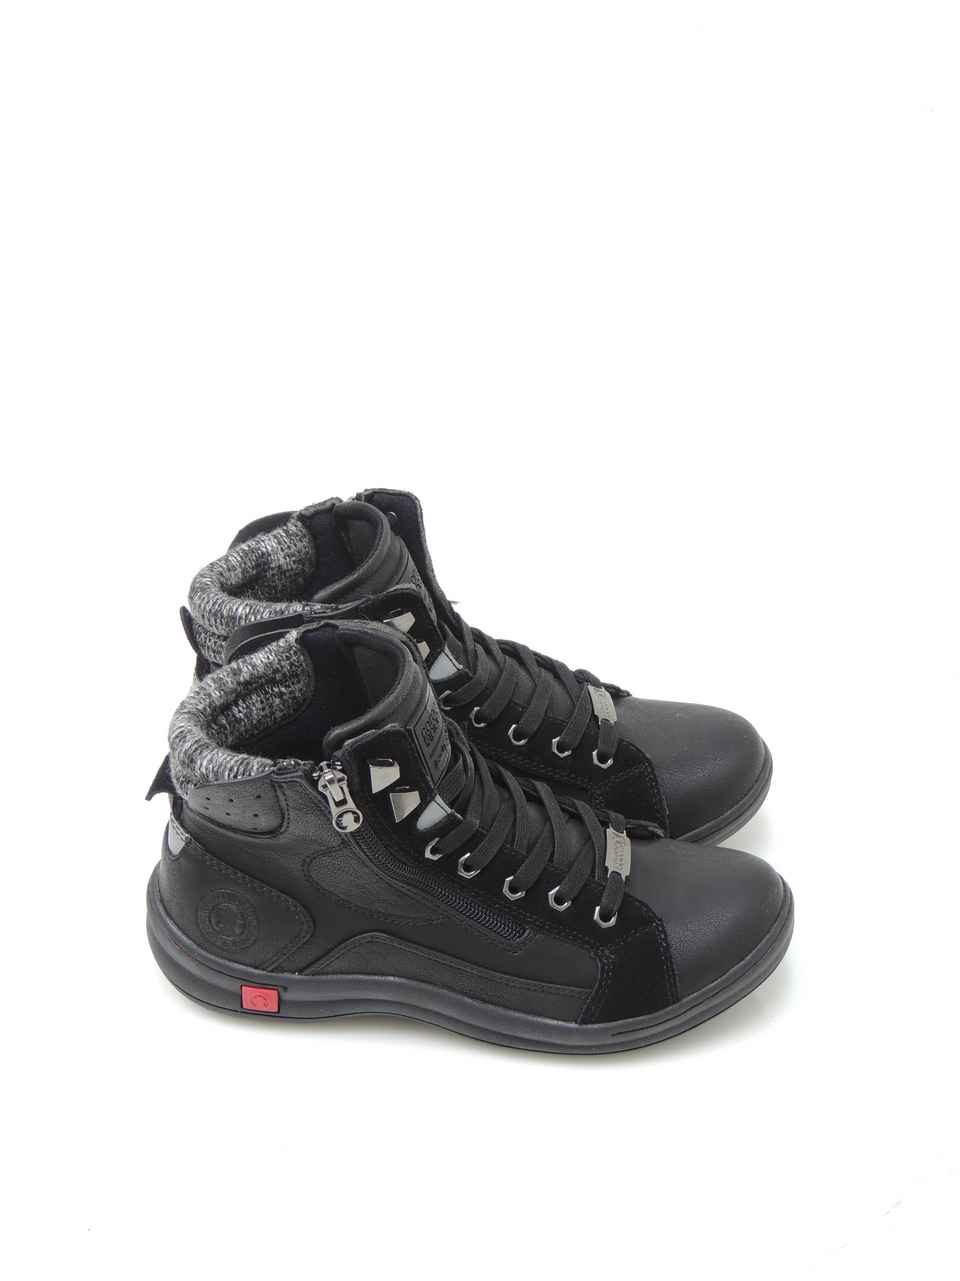 sneakers--coronel tapiocca-c1098-1-polipiel-negro